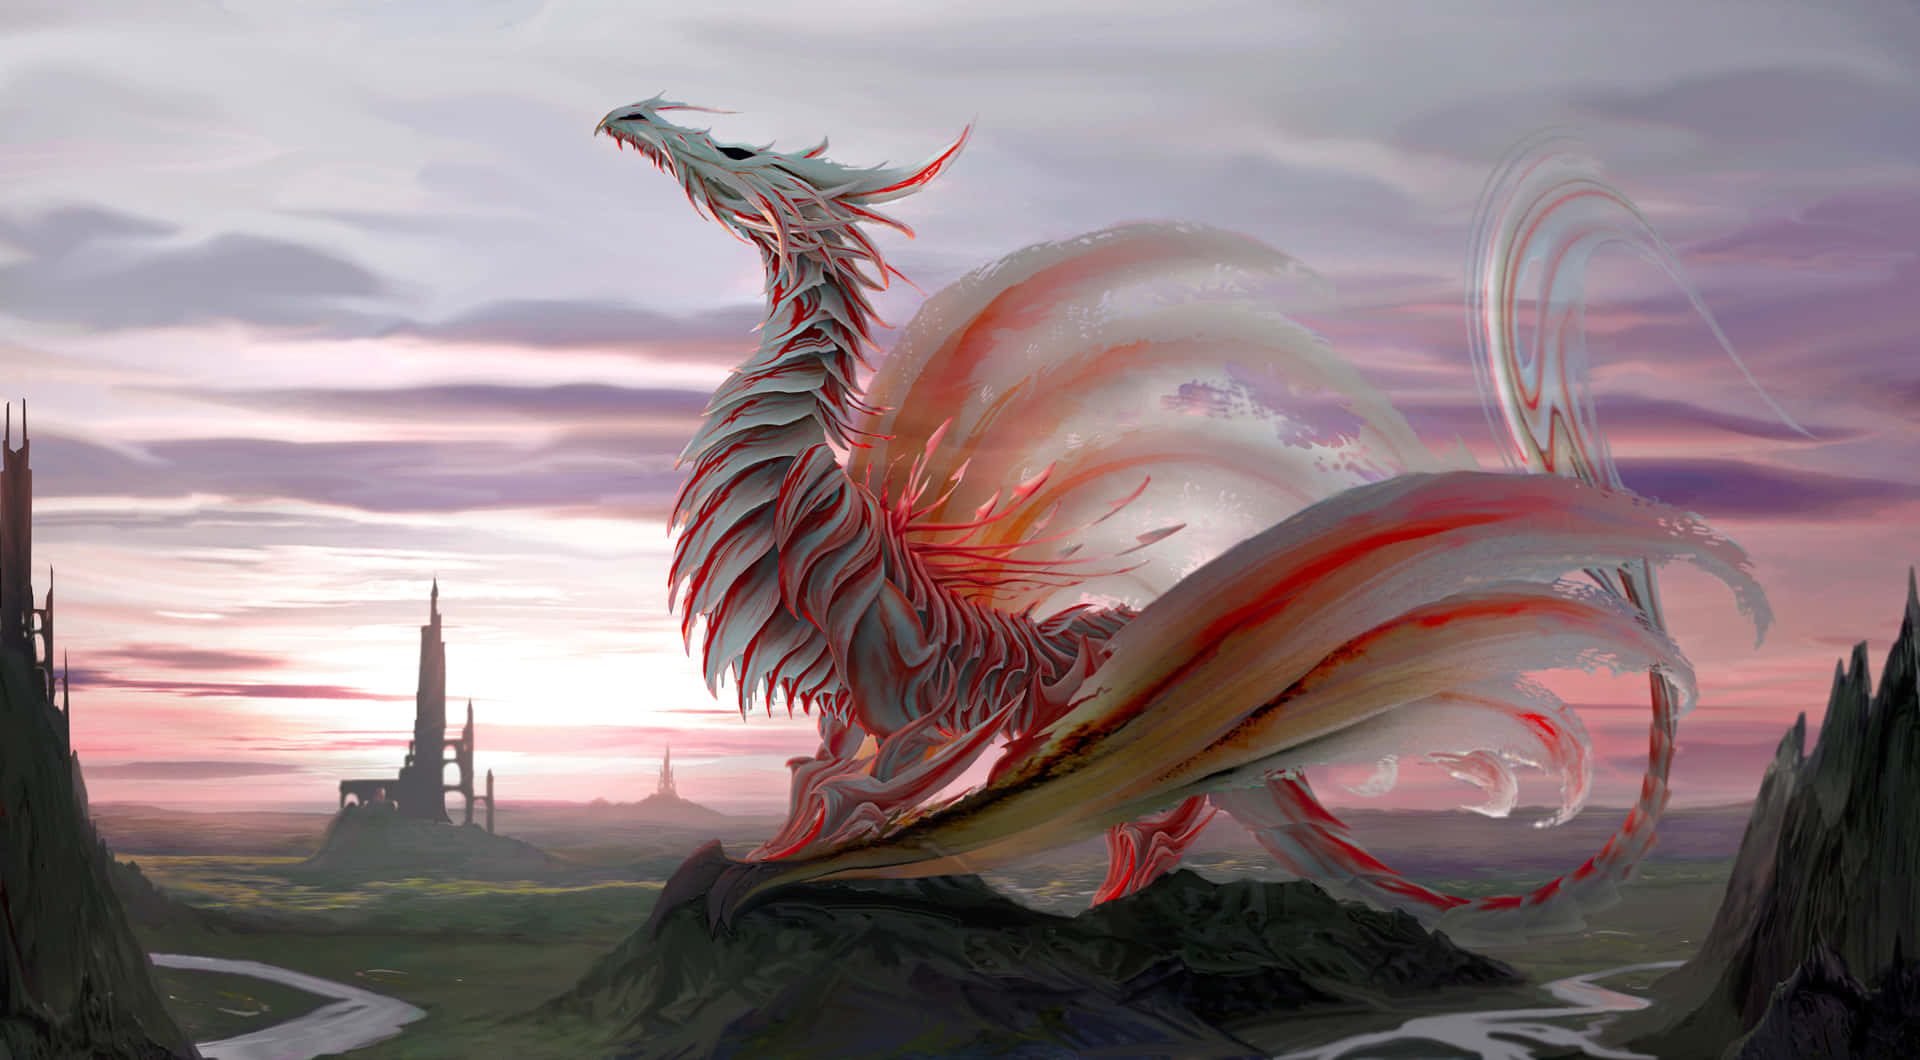 Mystical dragon against vibrant background